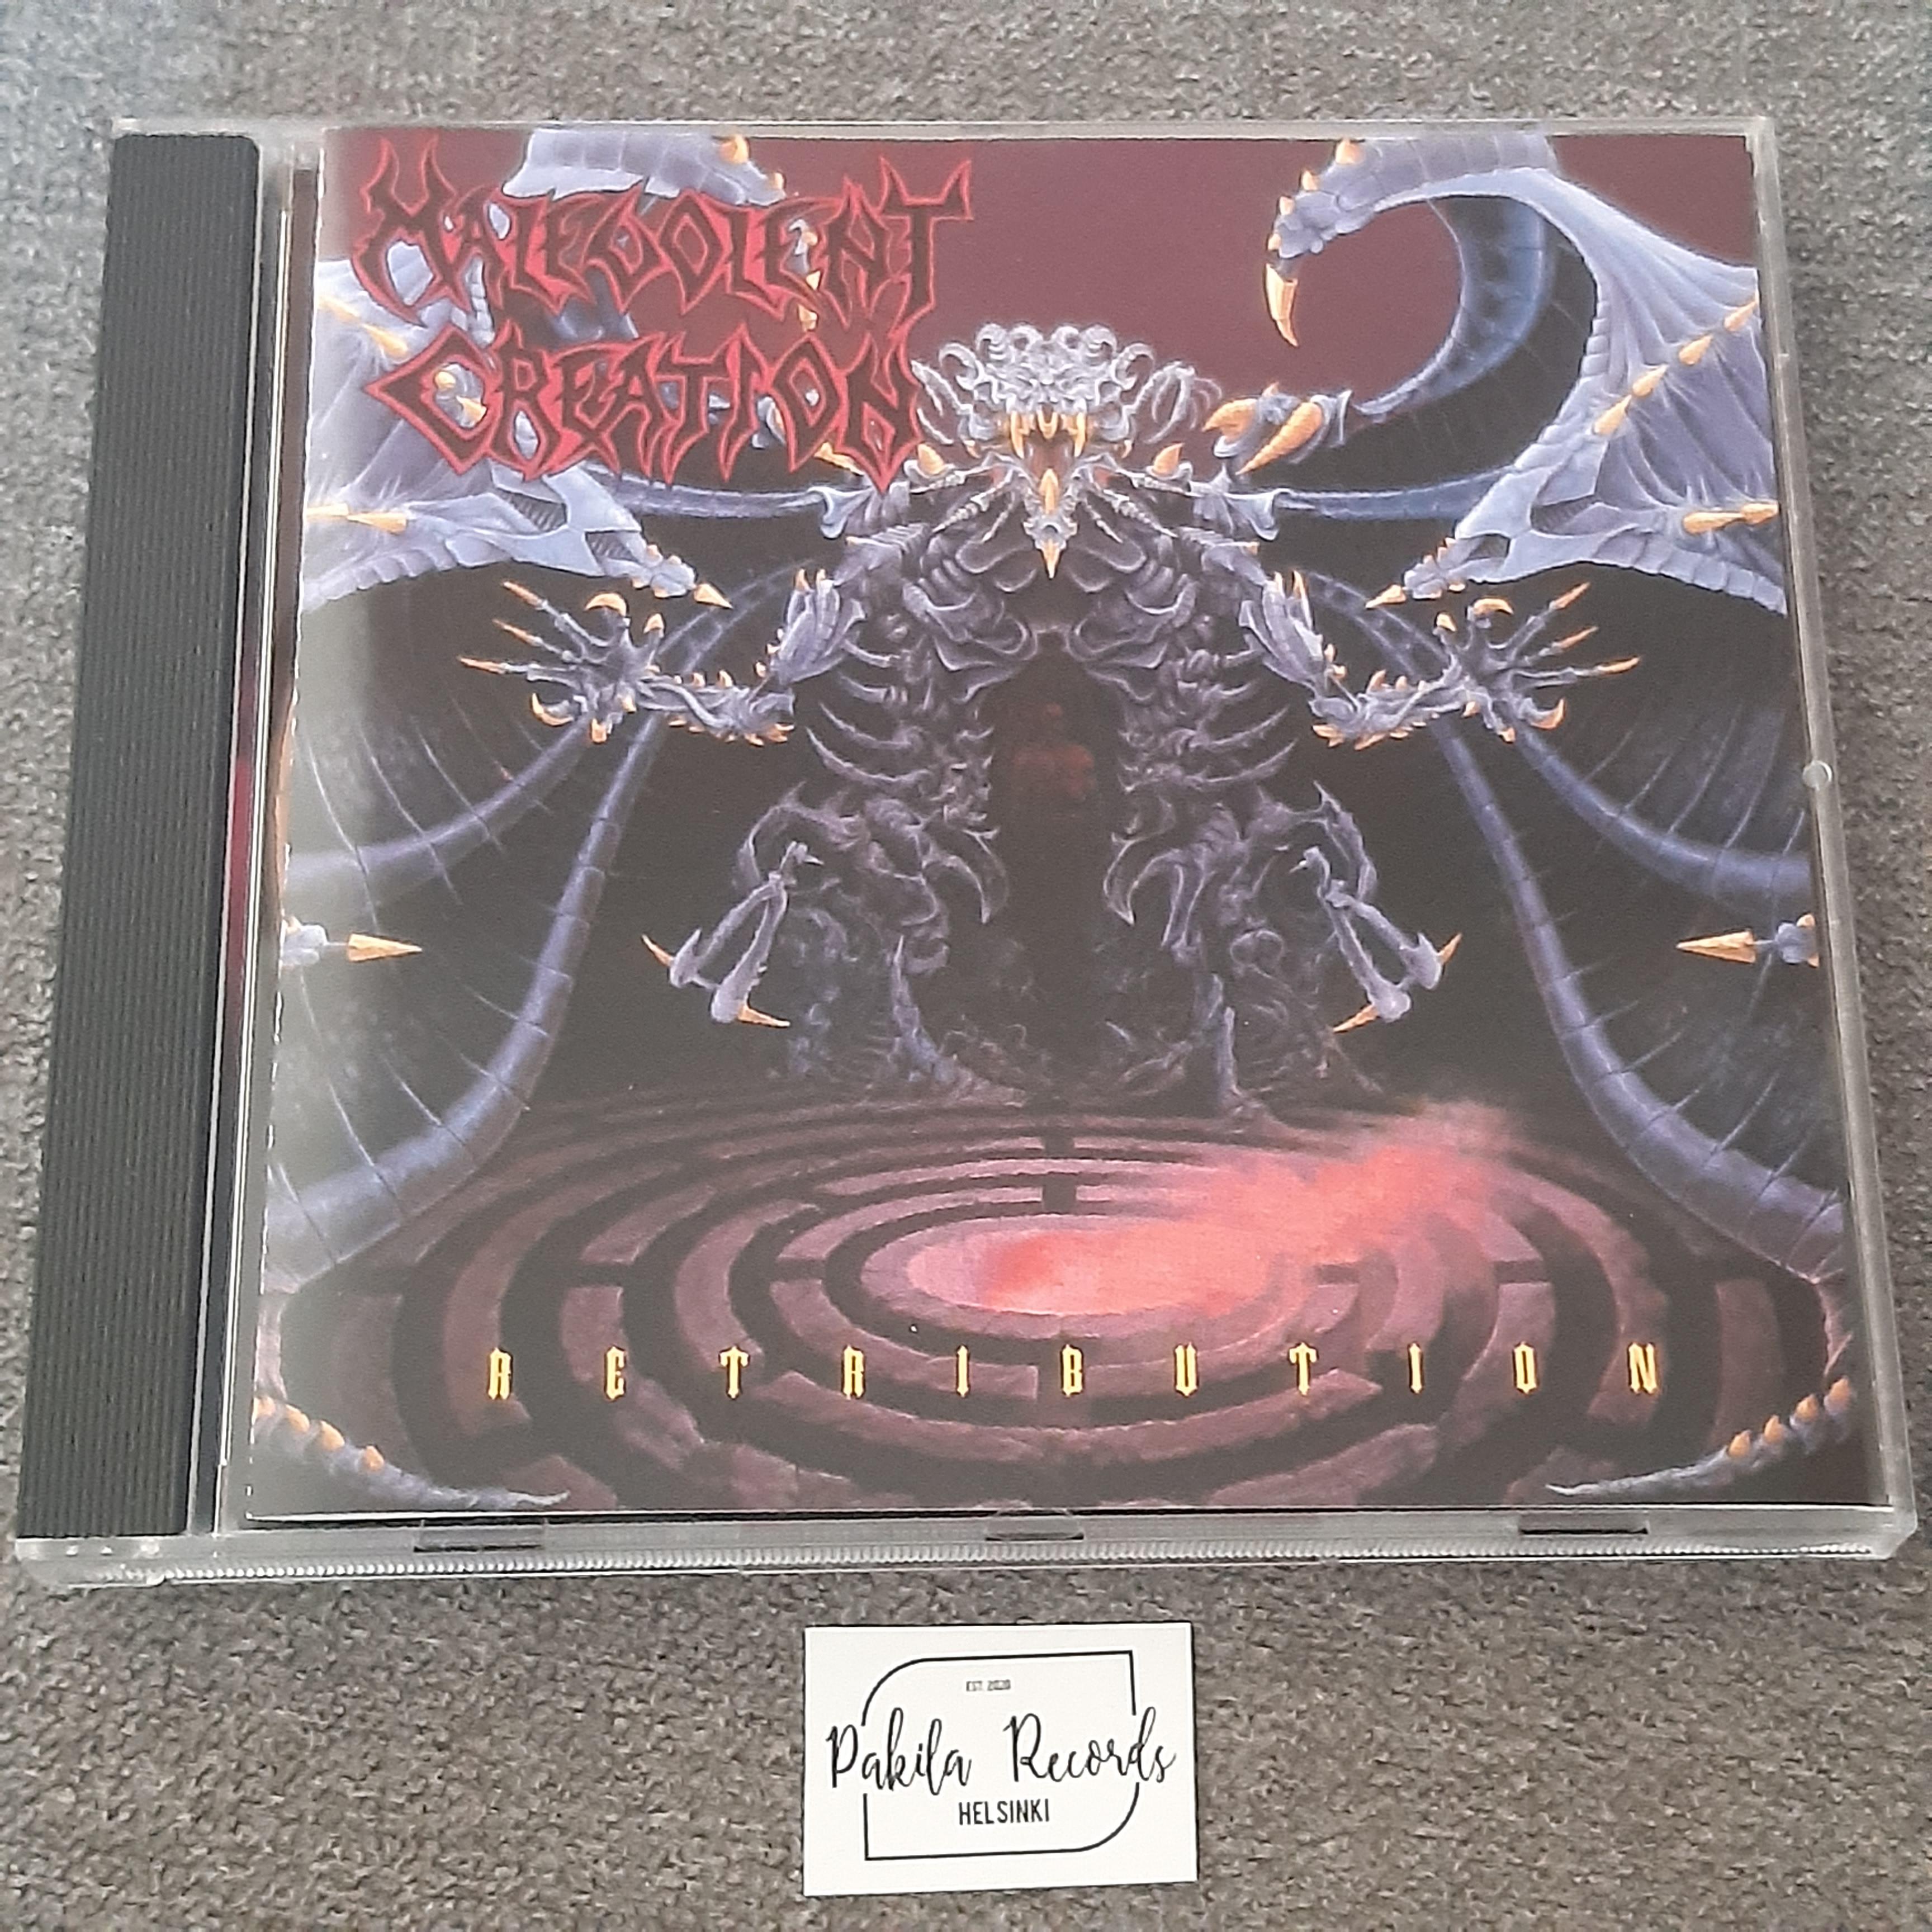 Malevolent Creation - Retribution - CD (käytetty)